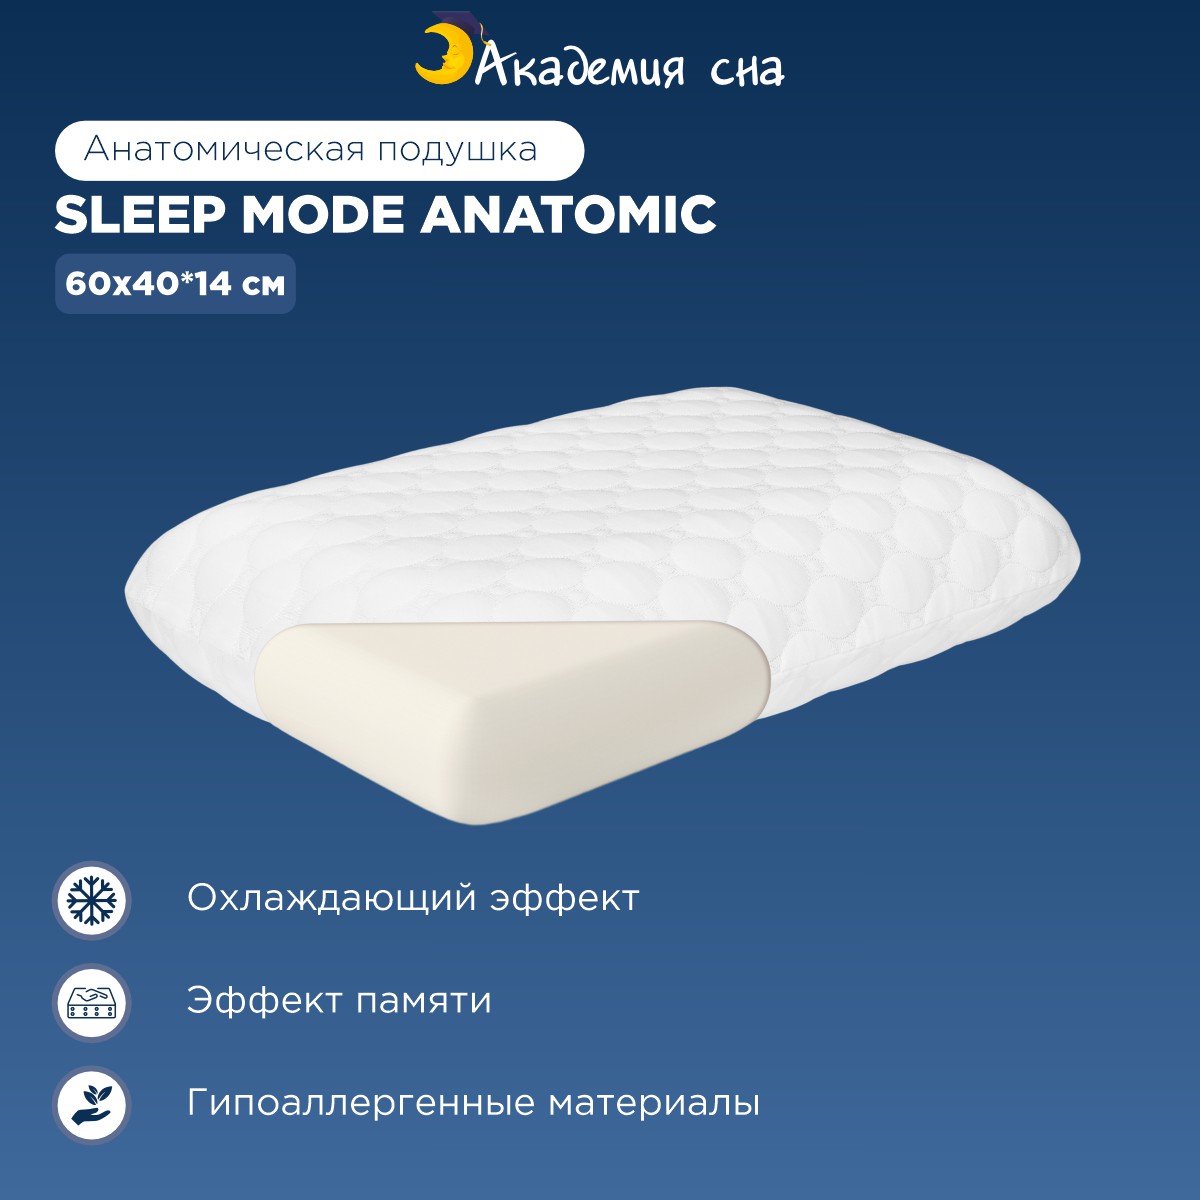 Анатомическая подушка Академия сна Sleep Mode Anatomic L